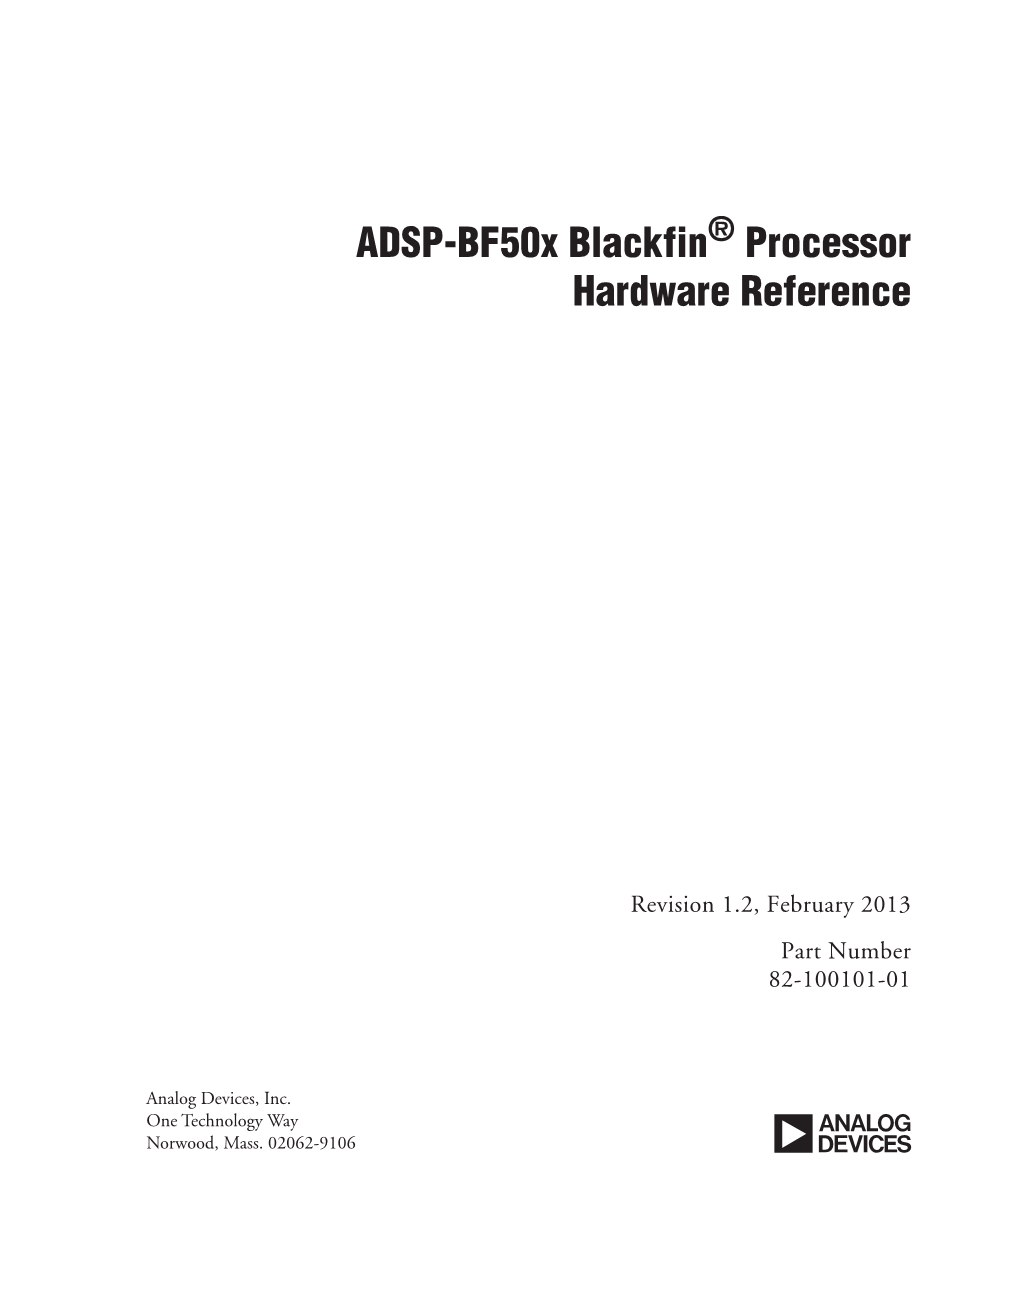 PDF 19308 Kb ADSP-Bf50x Blackfin ® Processor Hardware Reference